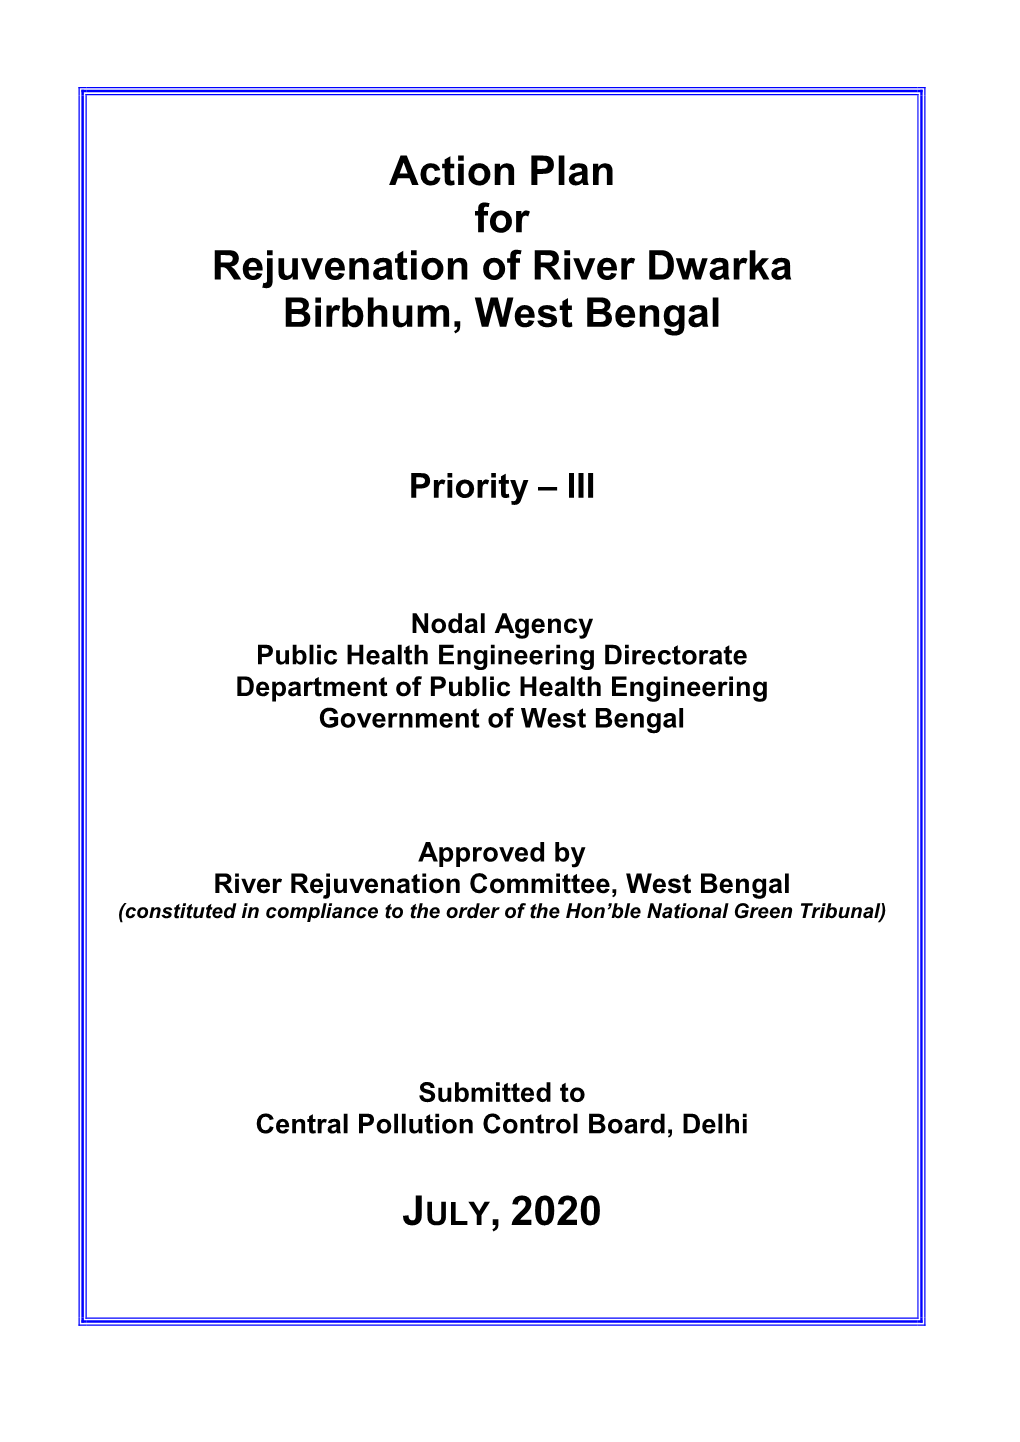 Action Plan for River Dwarka